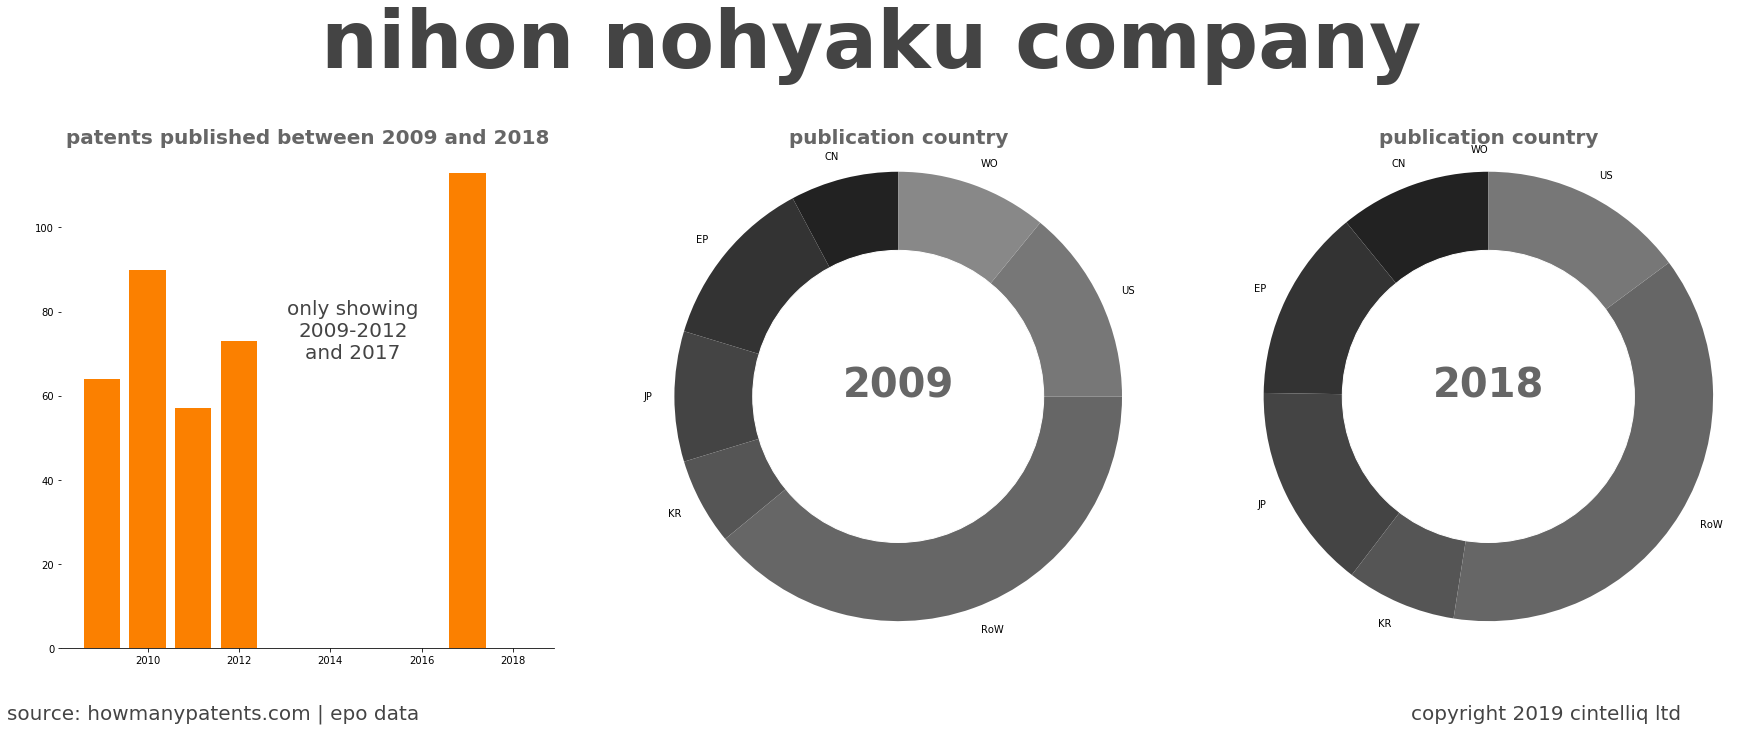 summary of patents for Nihon Nohyaku Company